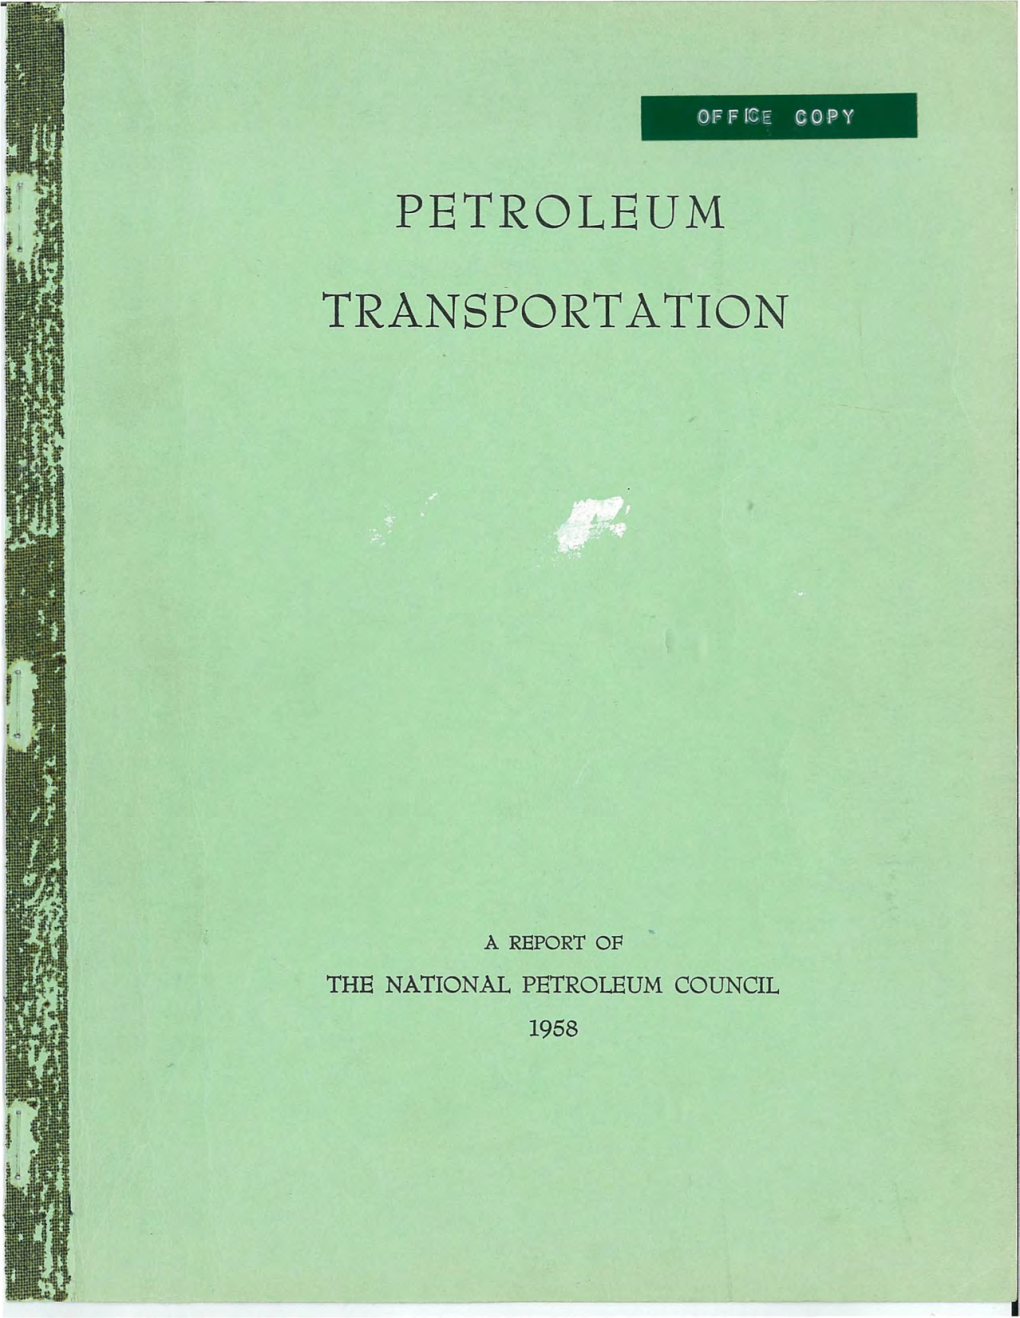 Petroleum Transportation February 21~ 1958